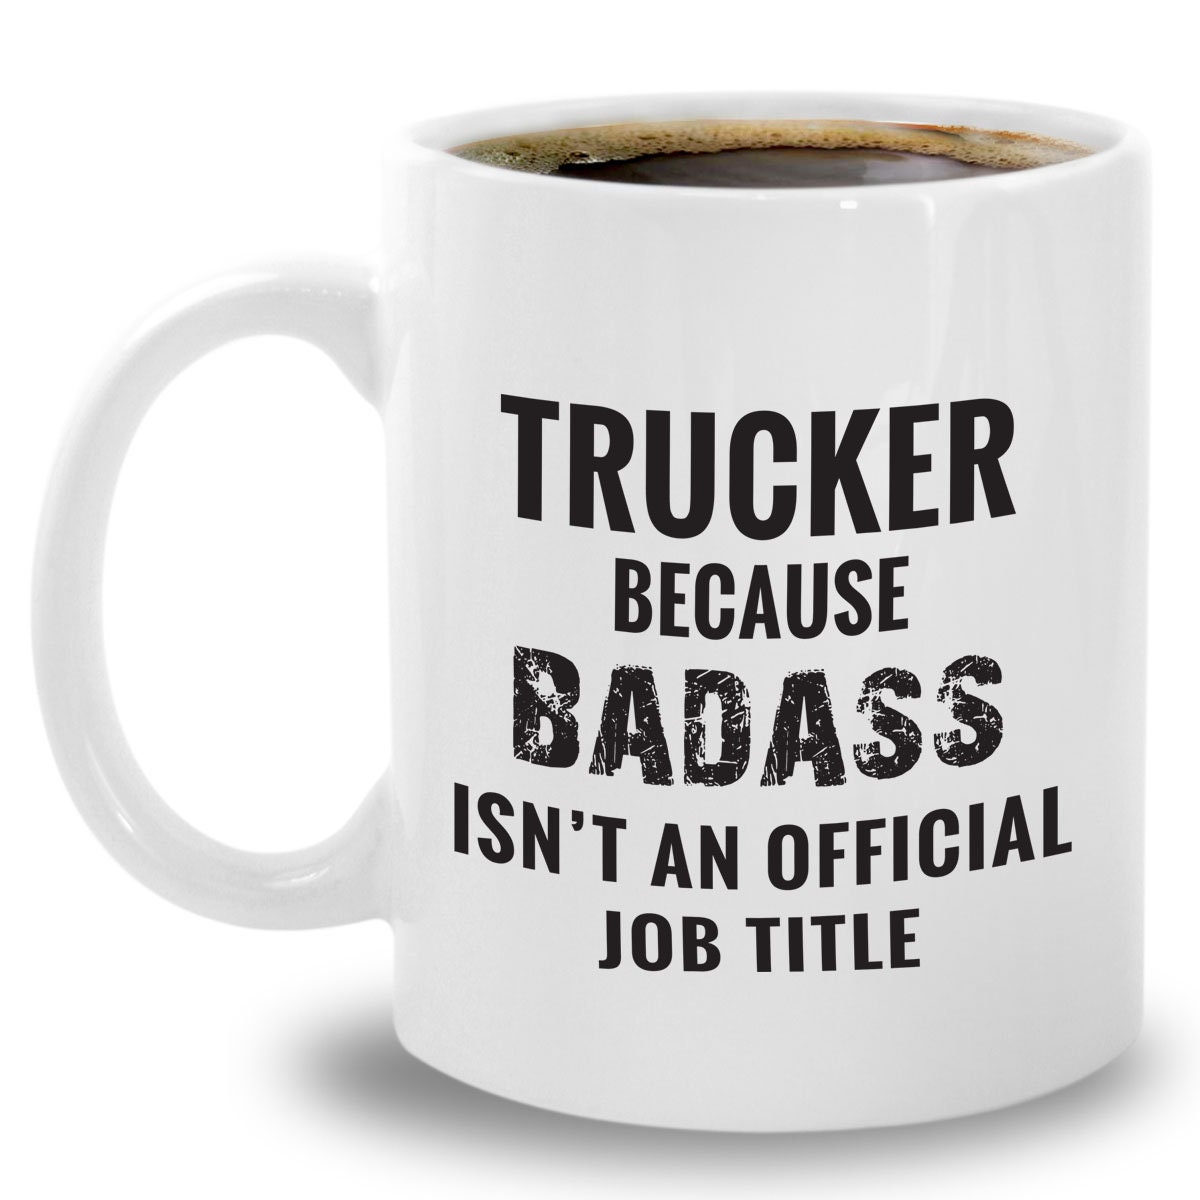 Trucker Travel Mug - Best Badass Trucking Dad Coffee Cup For Men